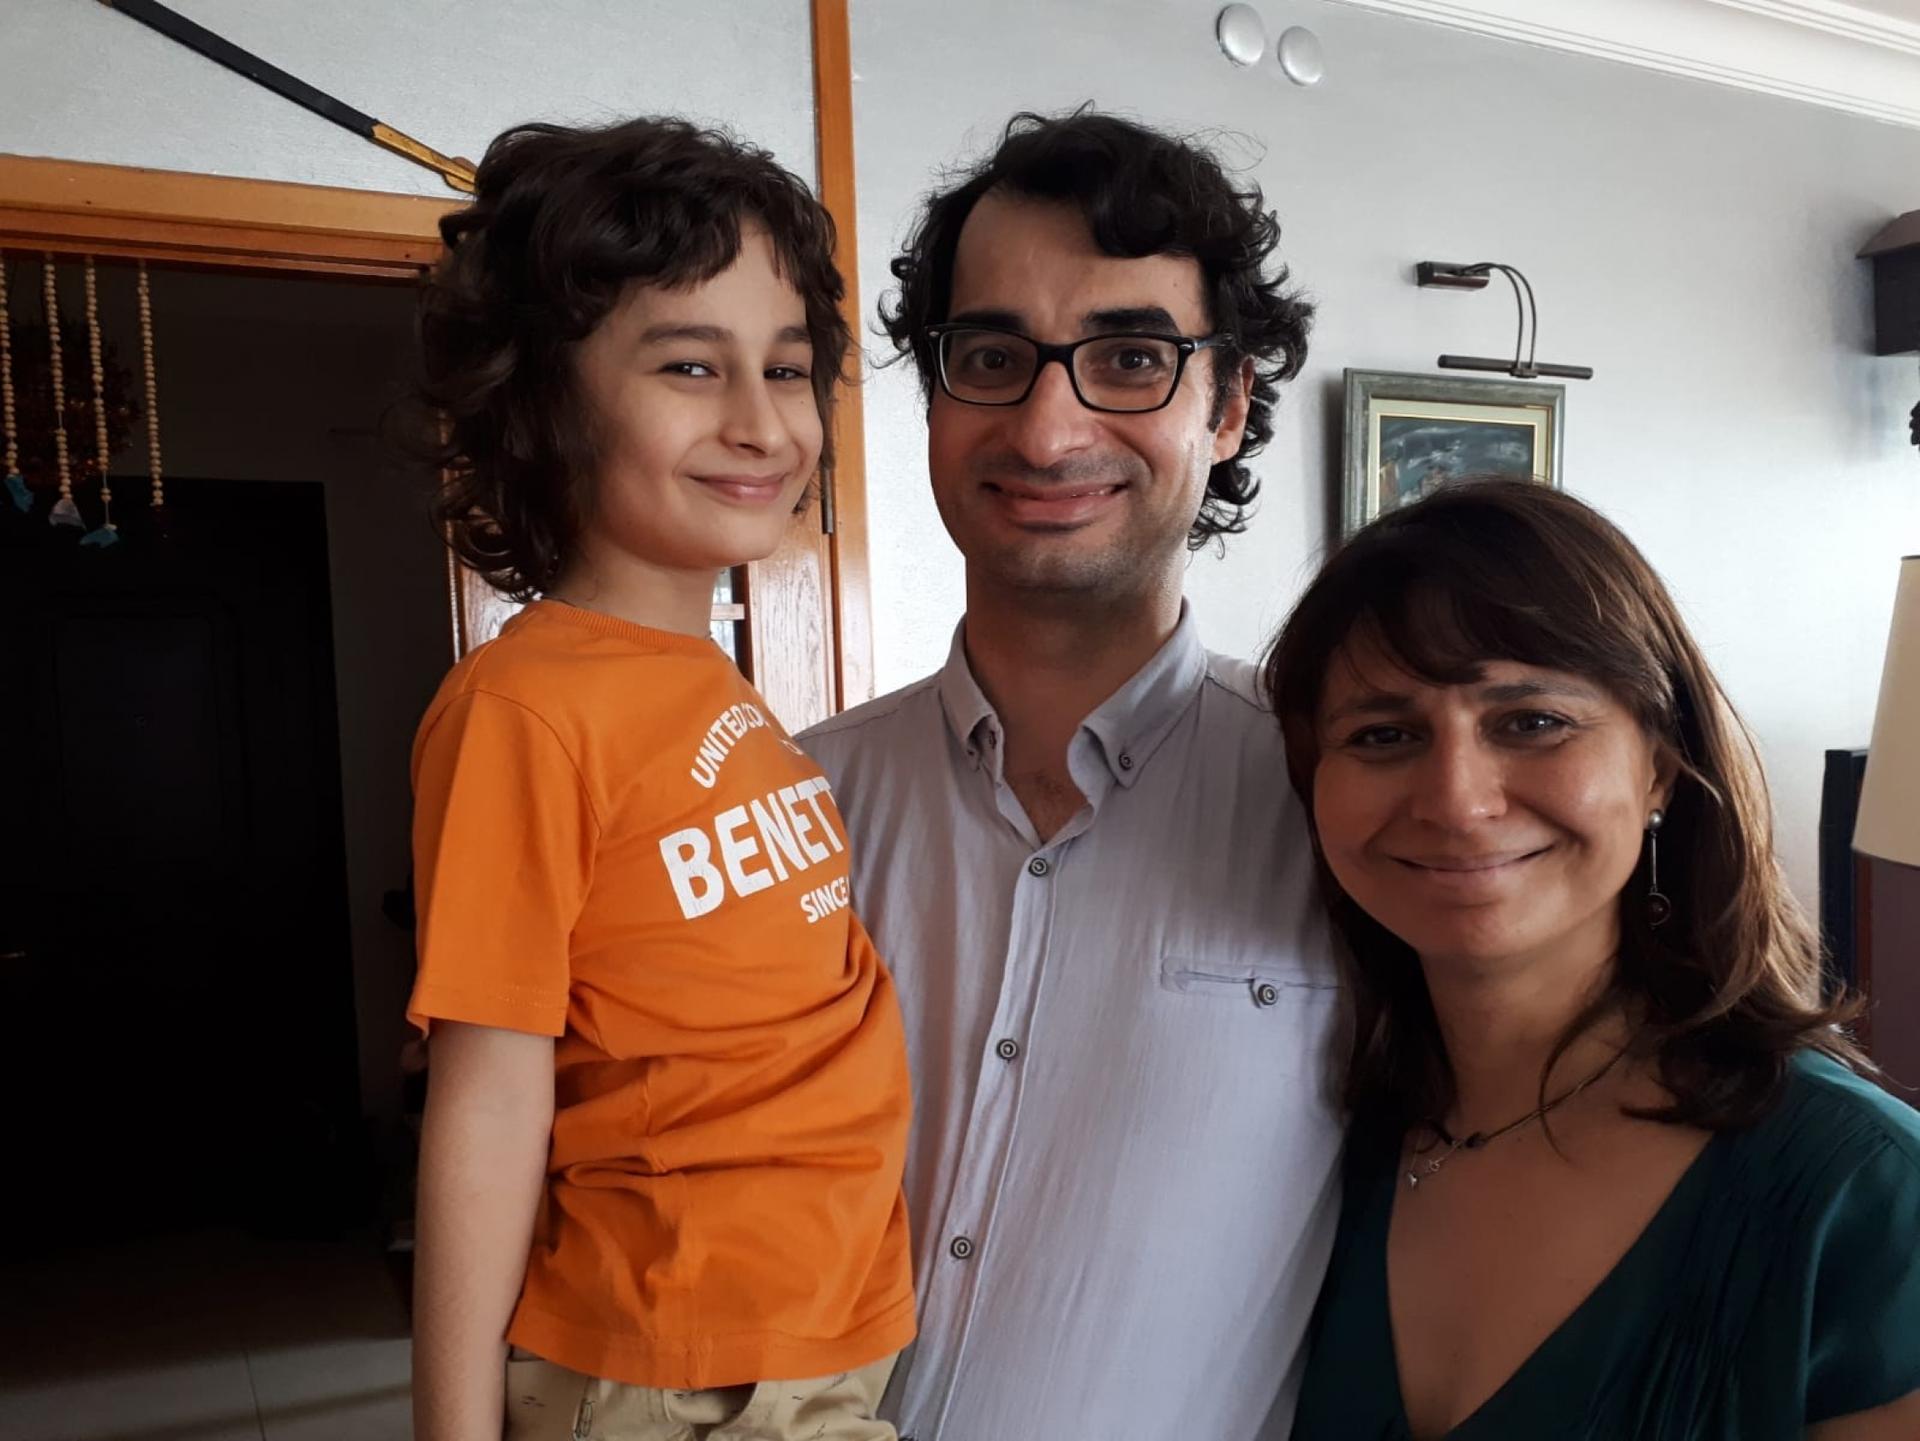 Özge Terkoğlu and her husband, Barış Terkoğlu, are pictured with their young son.